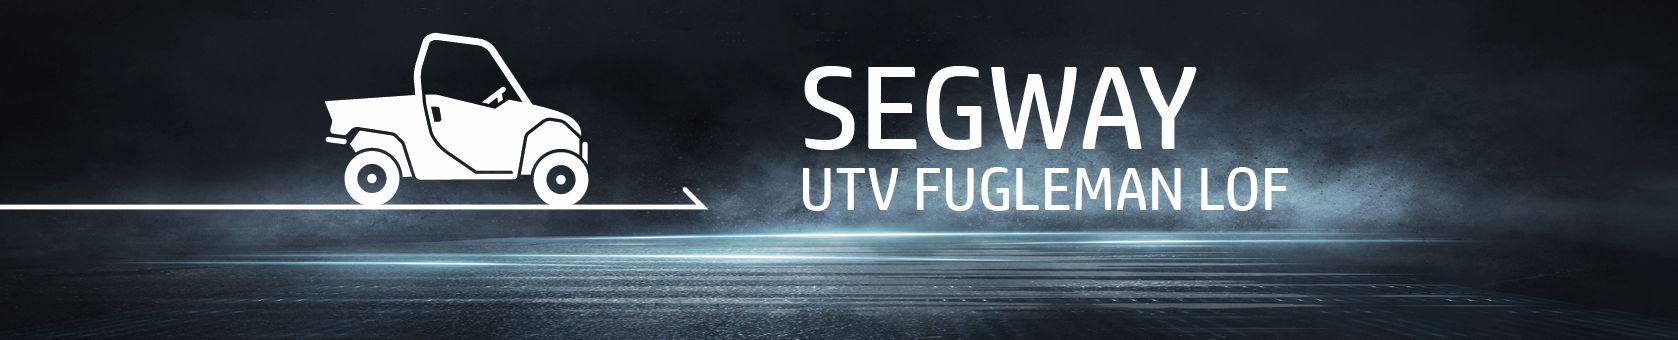 SEGWAY UTV